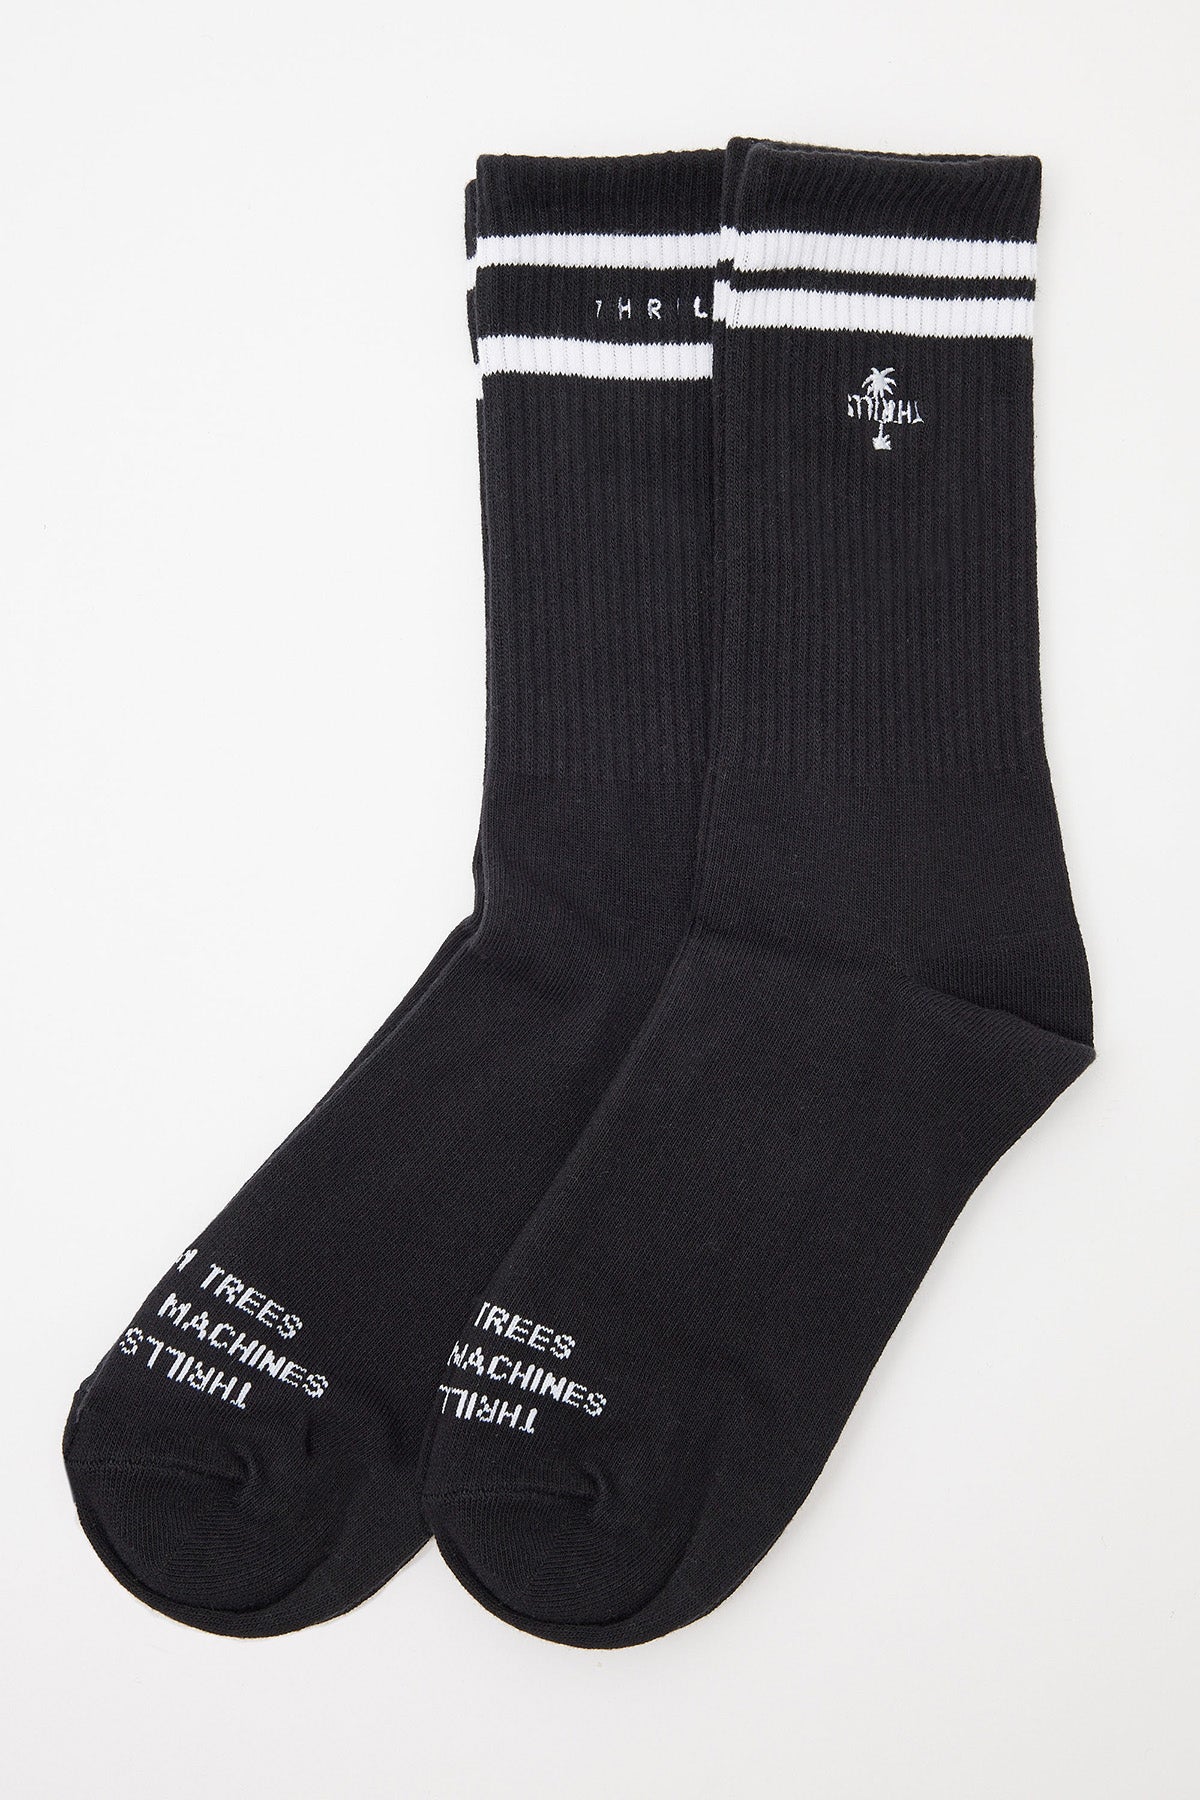 Thrills Multi Logo Socks 2 Pack Black – Universal Store